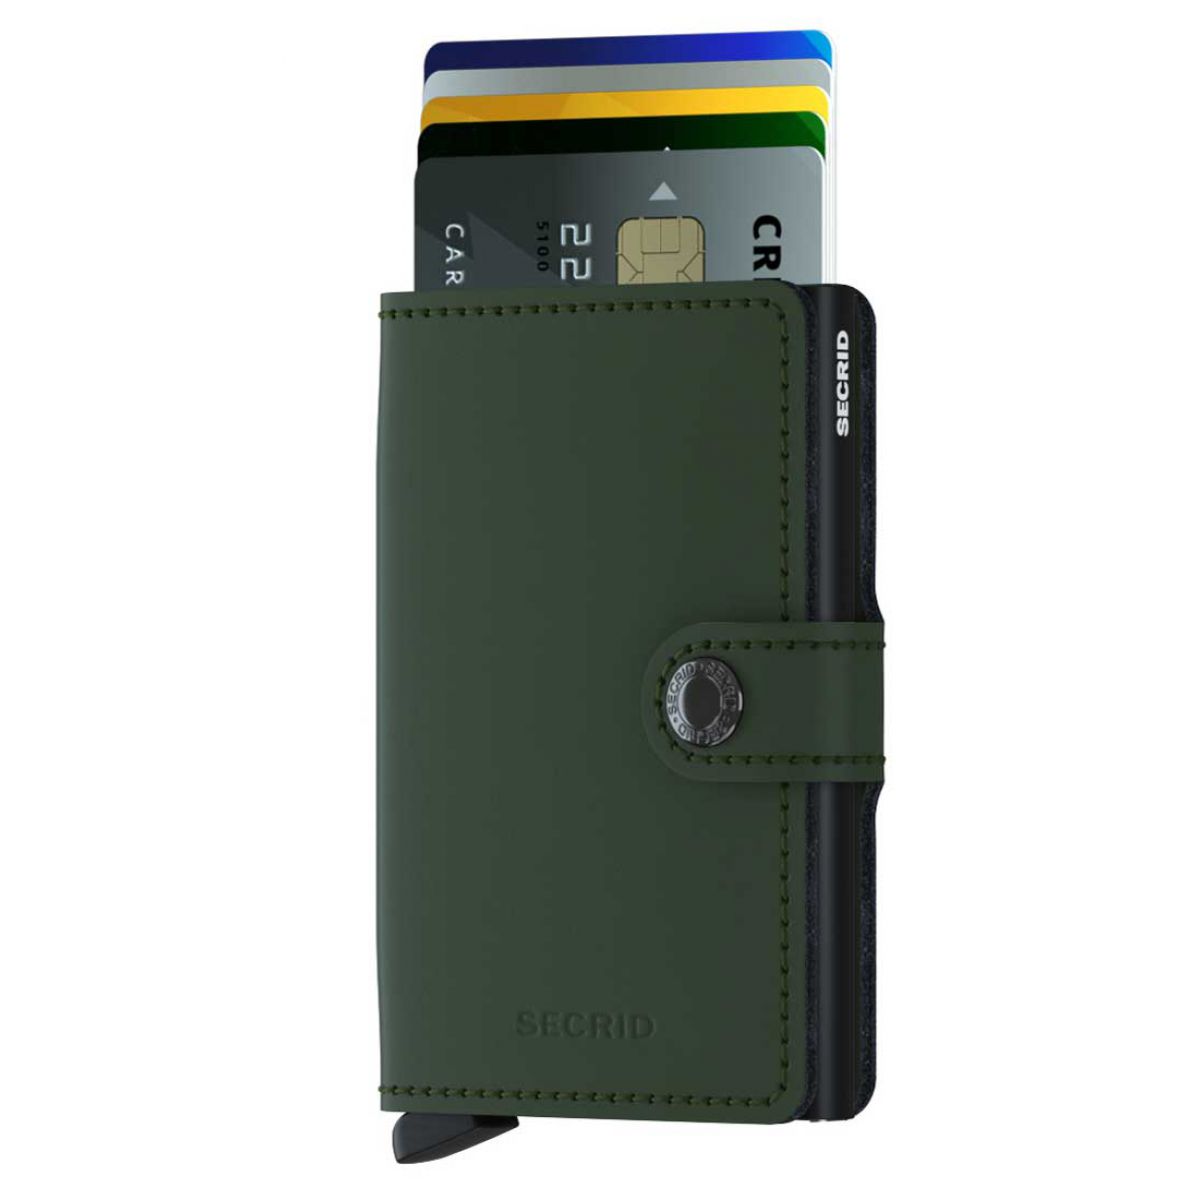 Complex nep Omhoog Secrid mini wallet leather matte dark green black - SECRID - product code-  ean 8718215285847